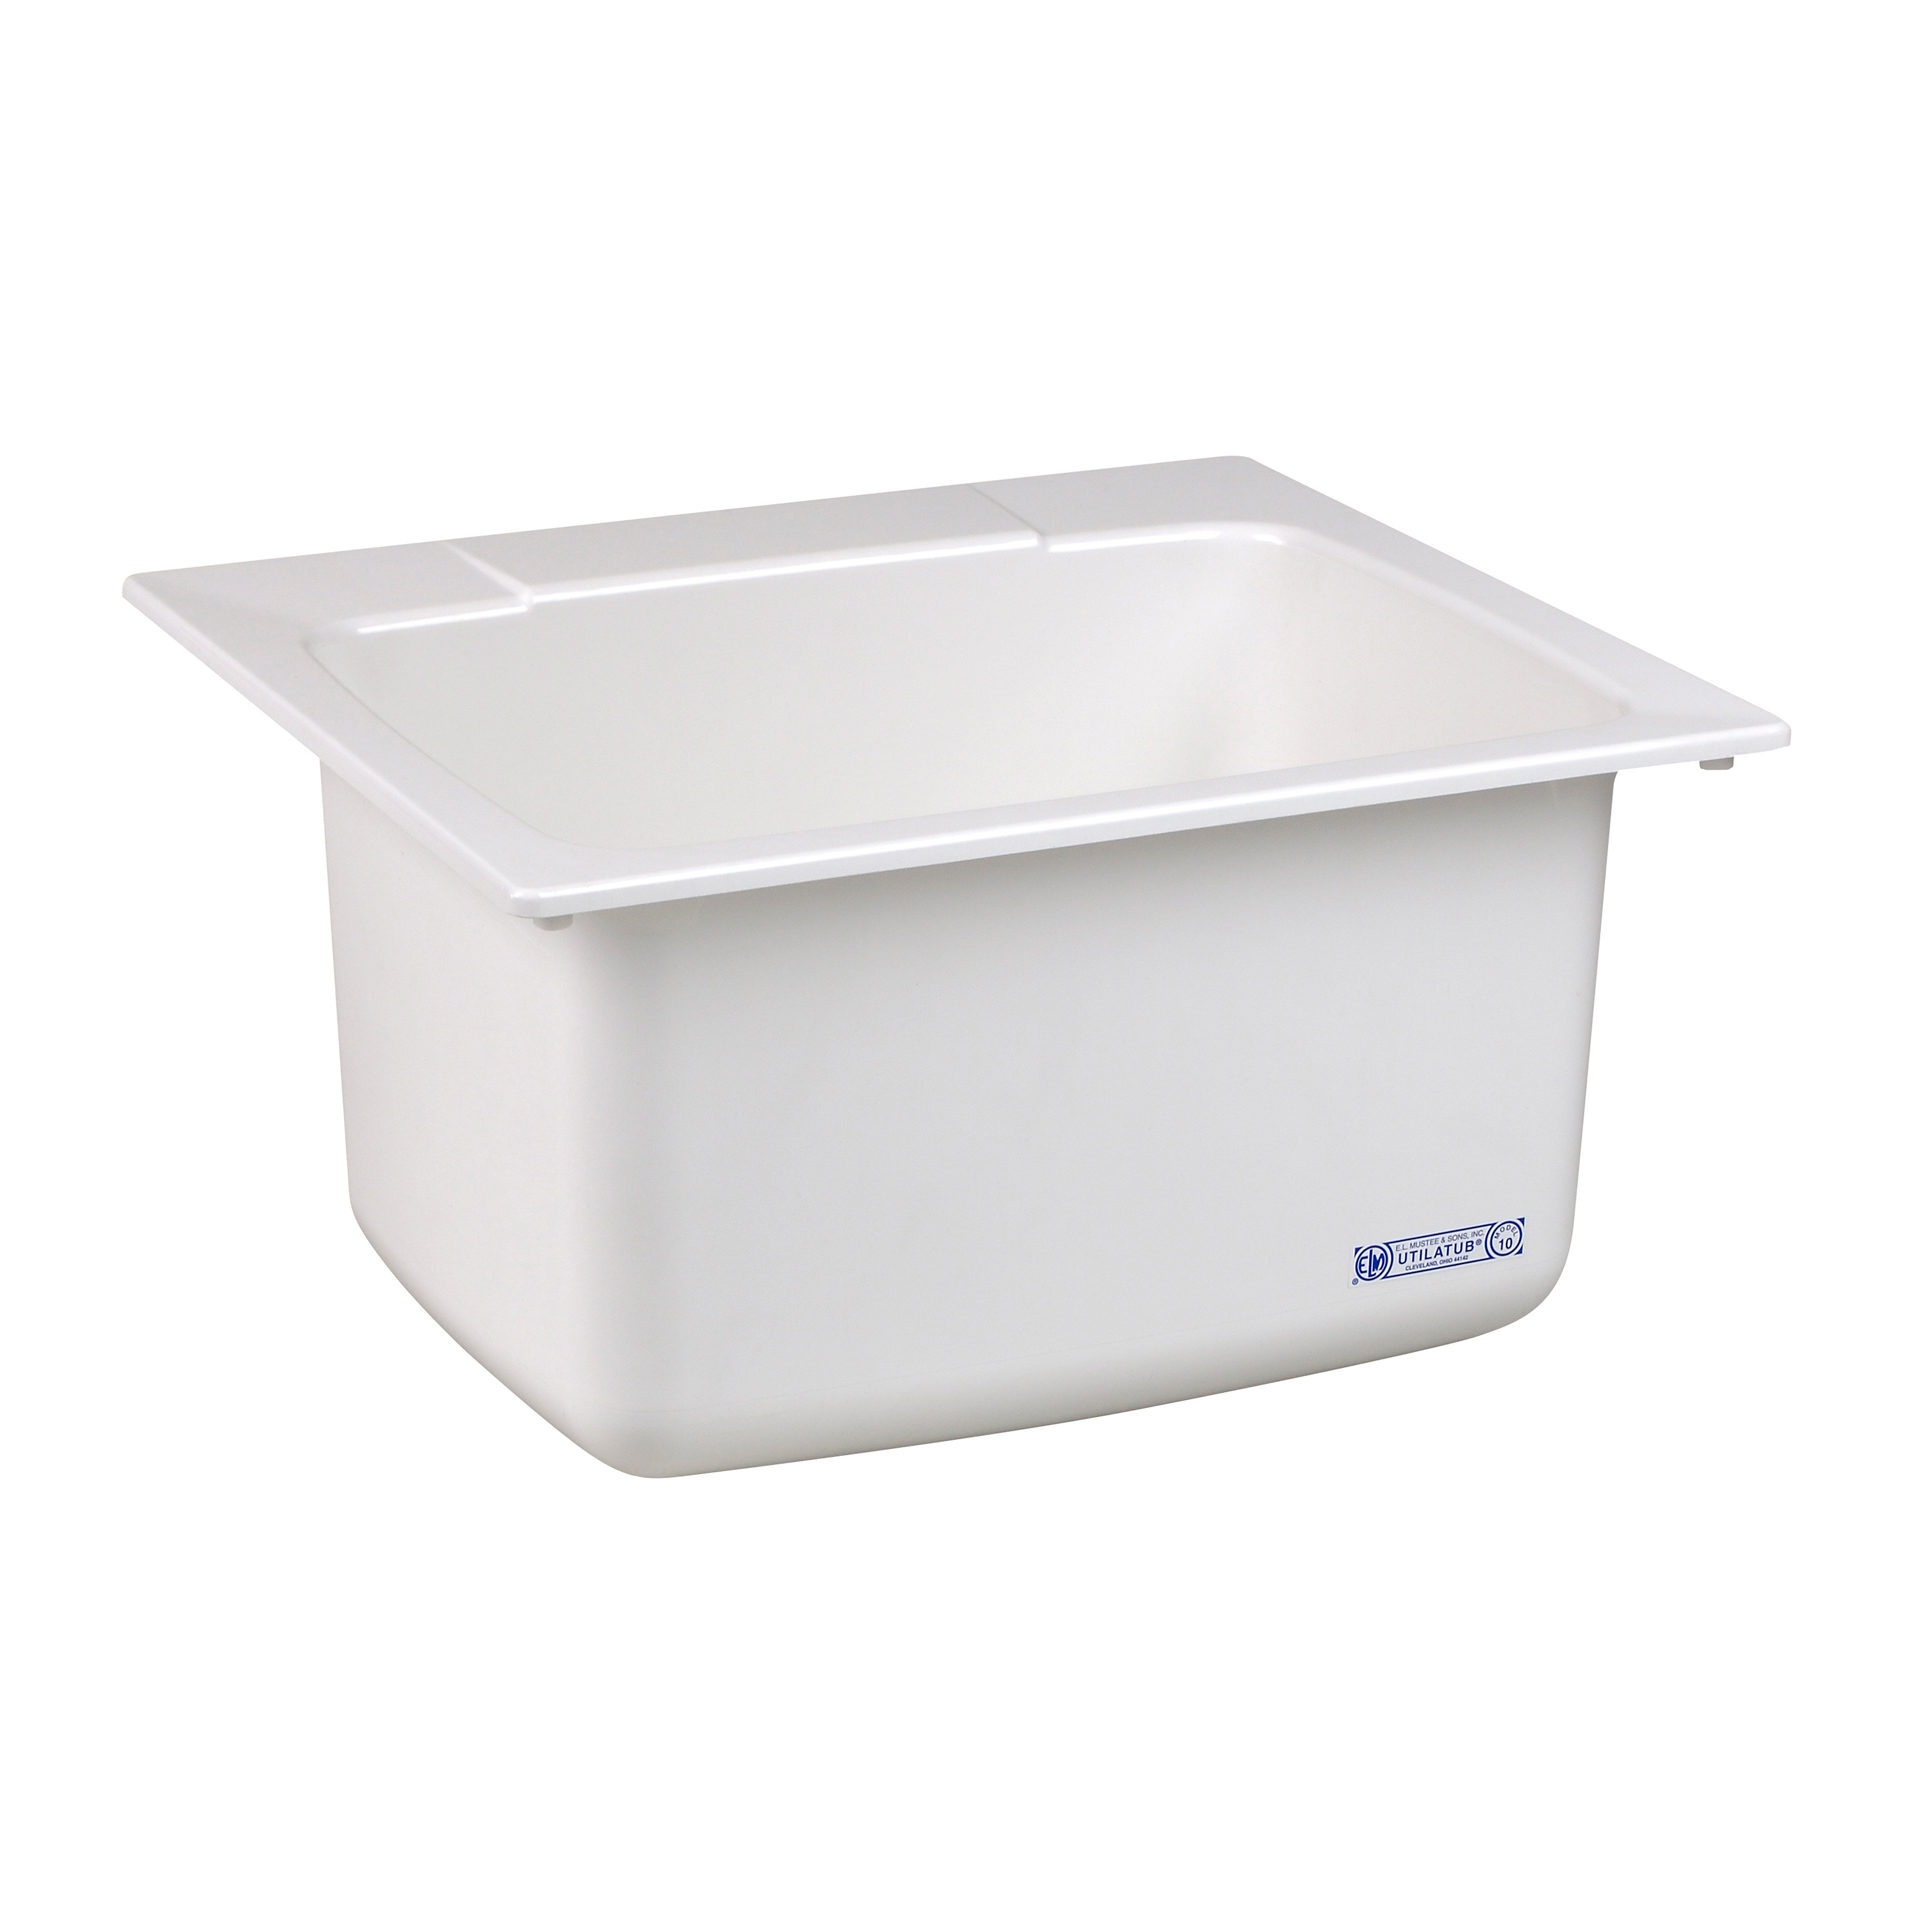 Single Bowl 25x22x13-3/4" Drop-In Utility Sink in White 4-Pk